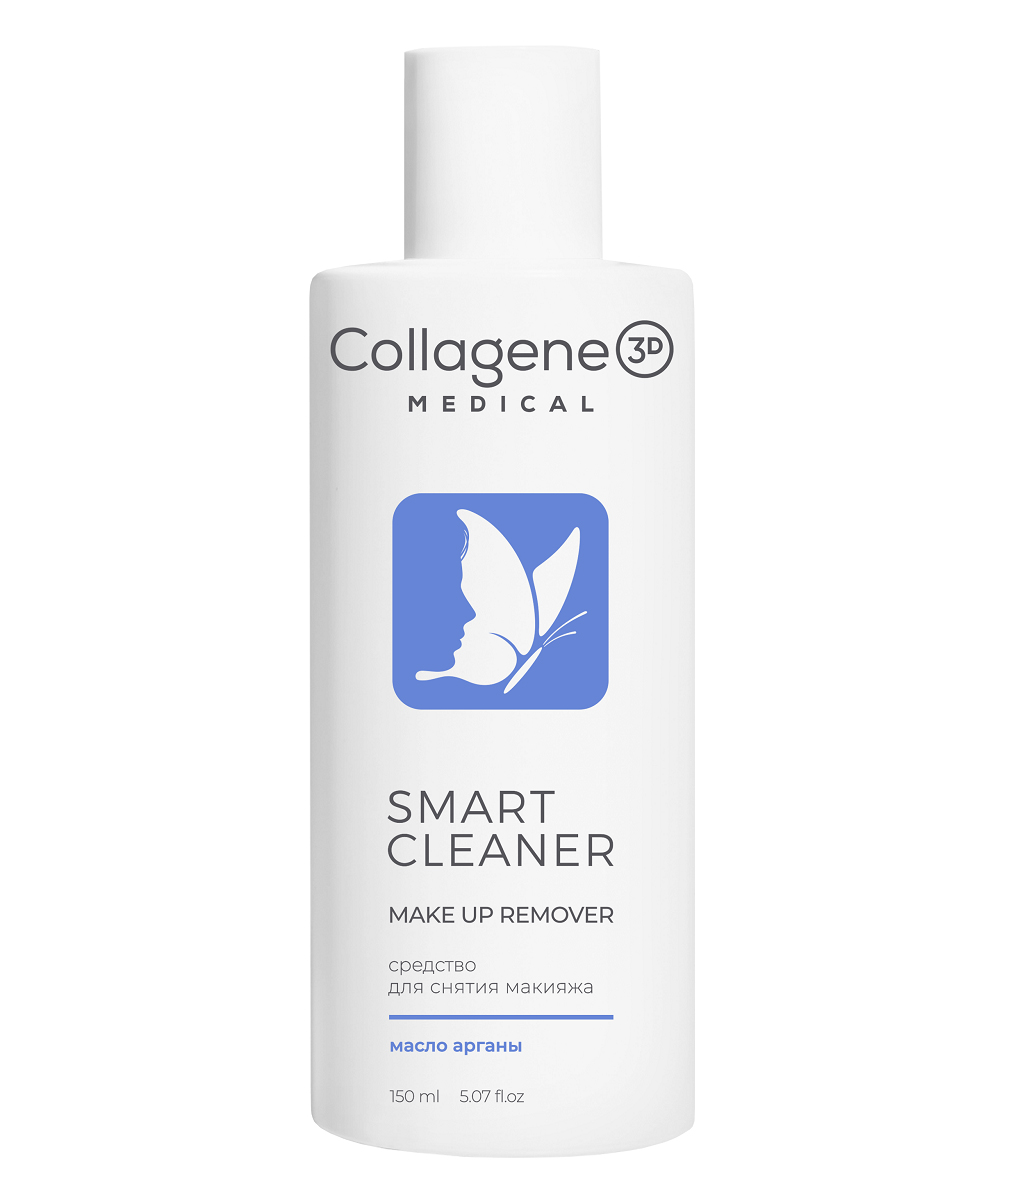 Купить Средство для снятия макияжа Medical Collagene 3D Smart Cleaner Make Up Remover,  150 мл